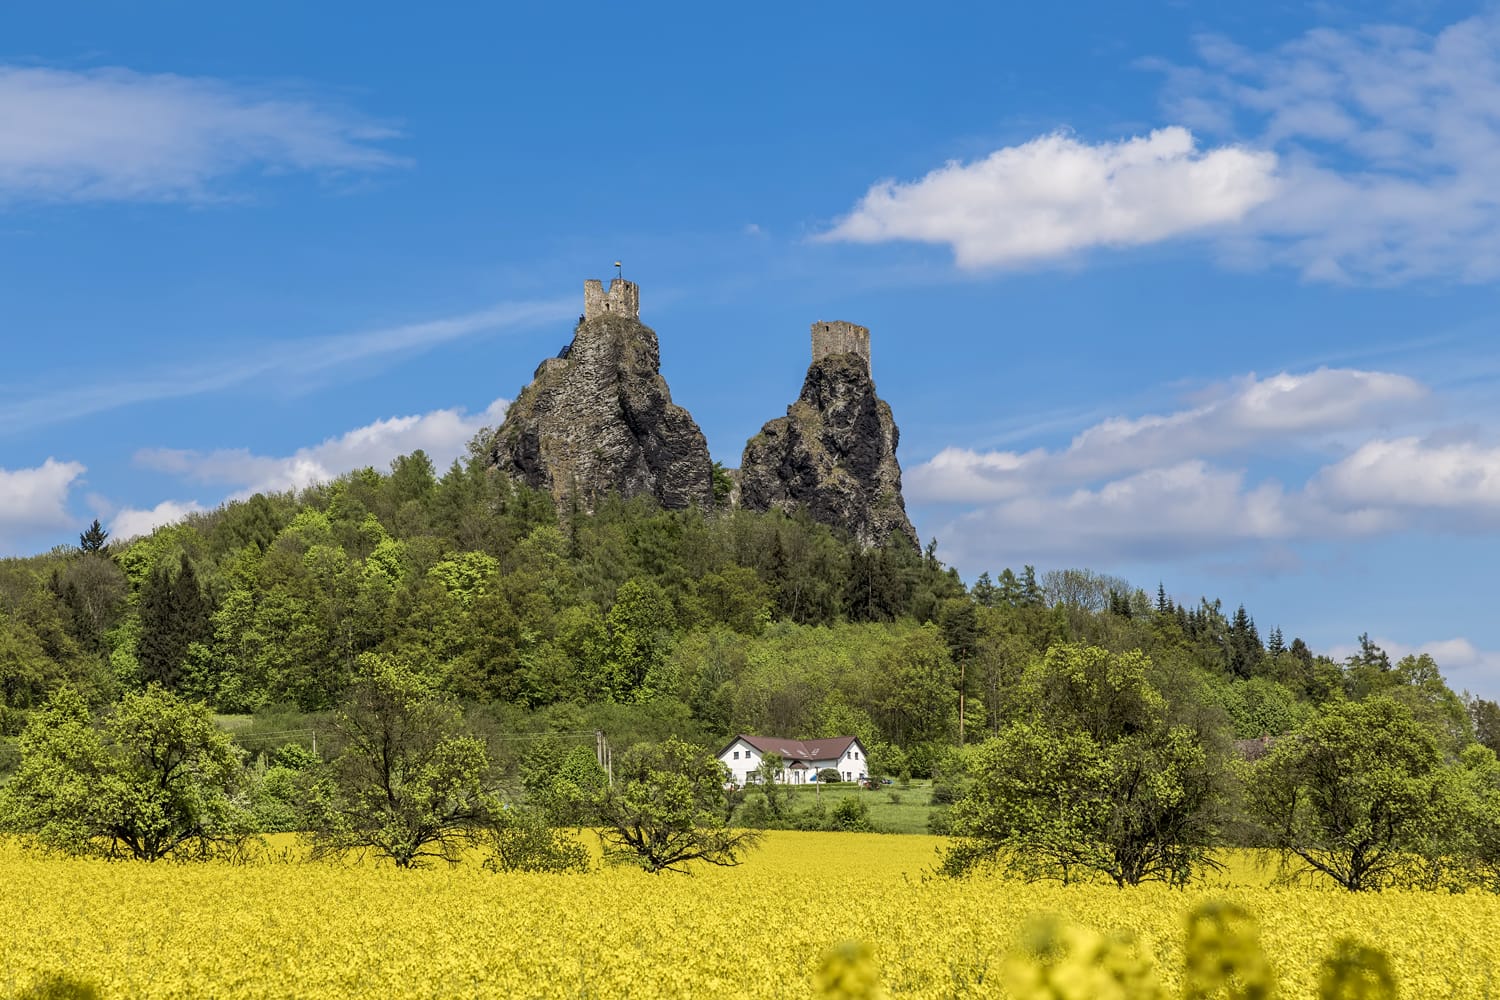 The surviving towers of the castle Trosky. Czech Republic